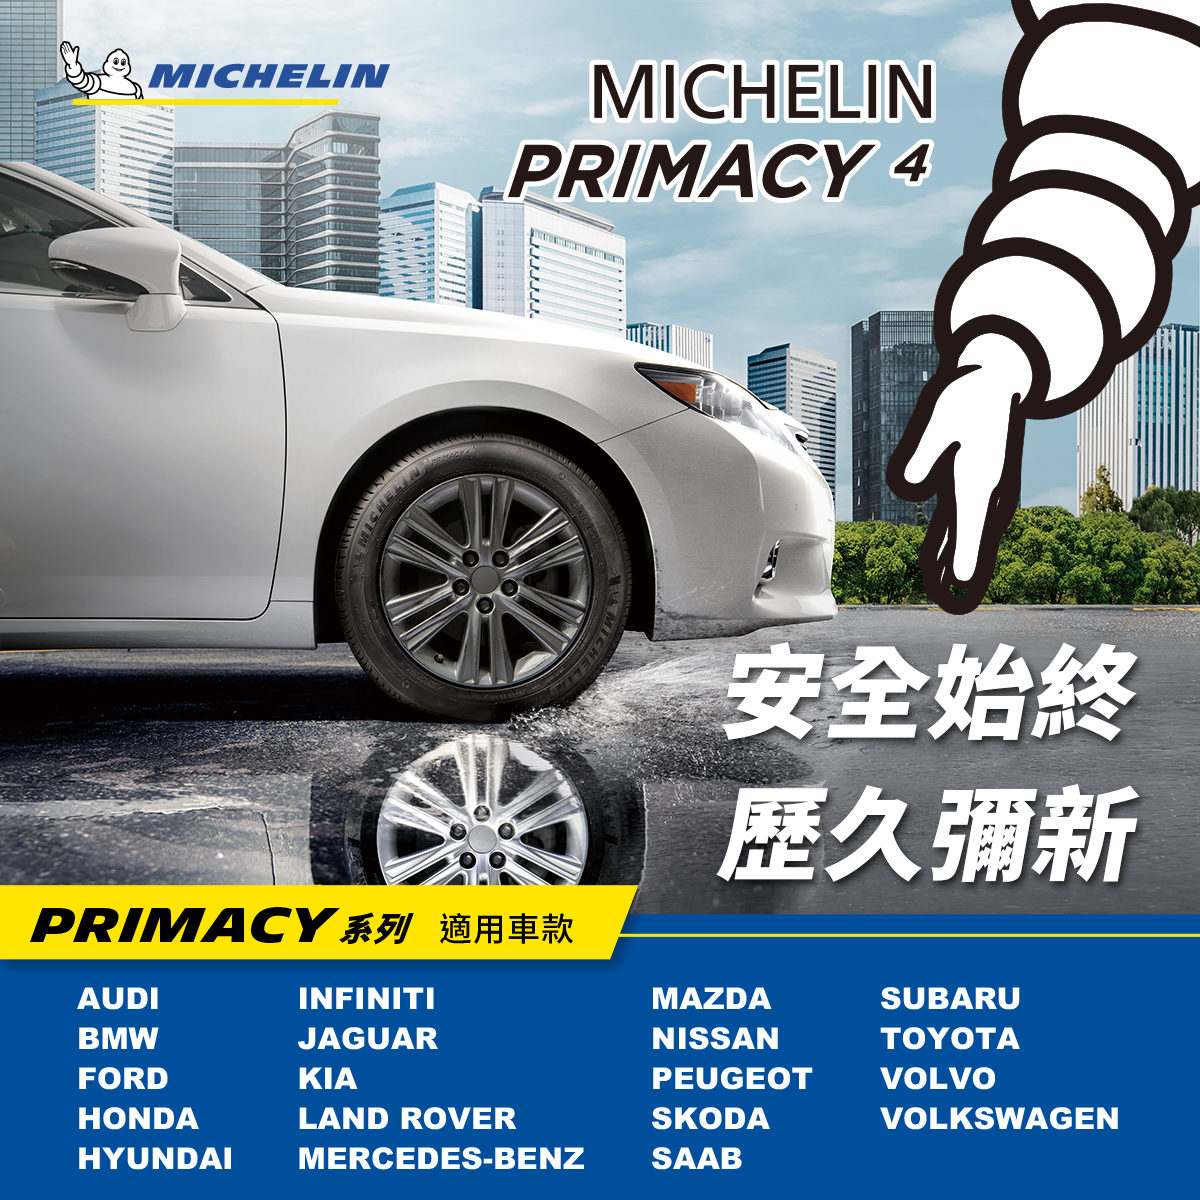 Michelin 米其林輪胎，PRIMACY 4， 長效濕地制動性能，排水空間更大，出色高里程表現及貼心磨耗指示設計，輕鬆掌握最佳換胎時機。